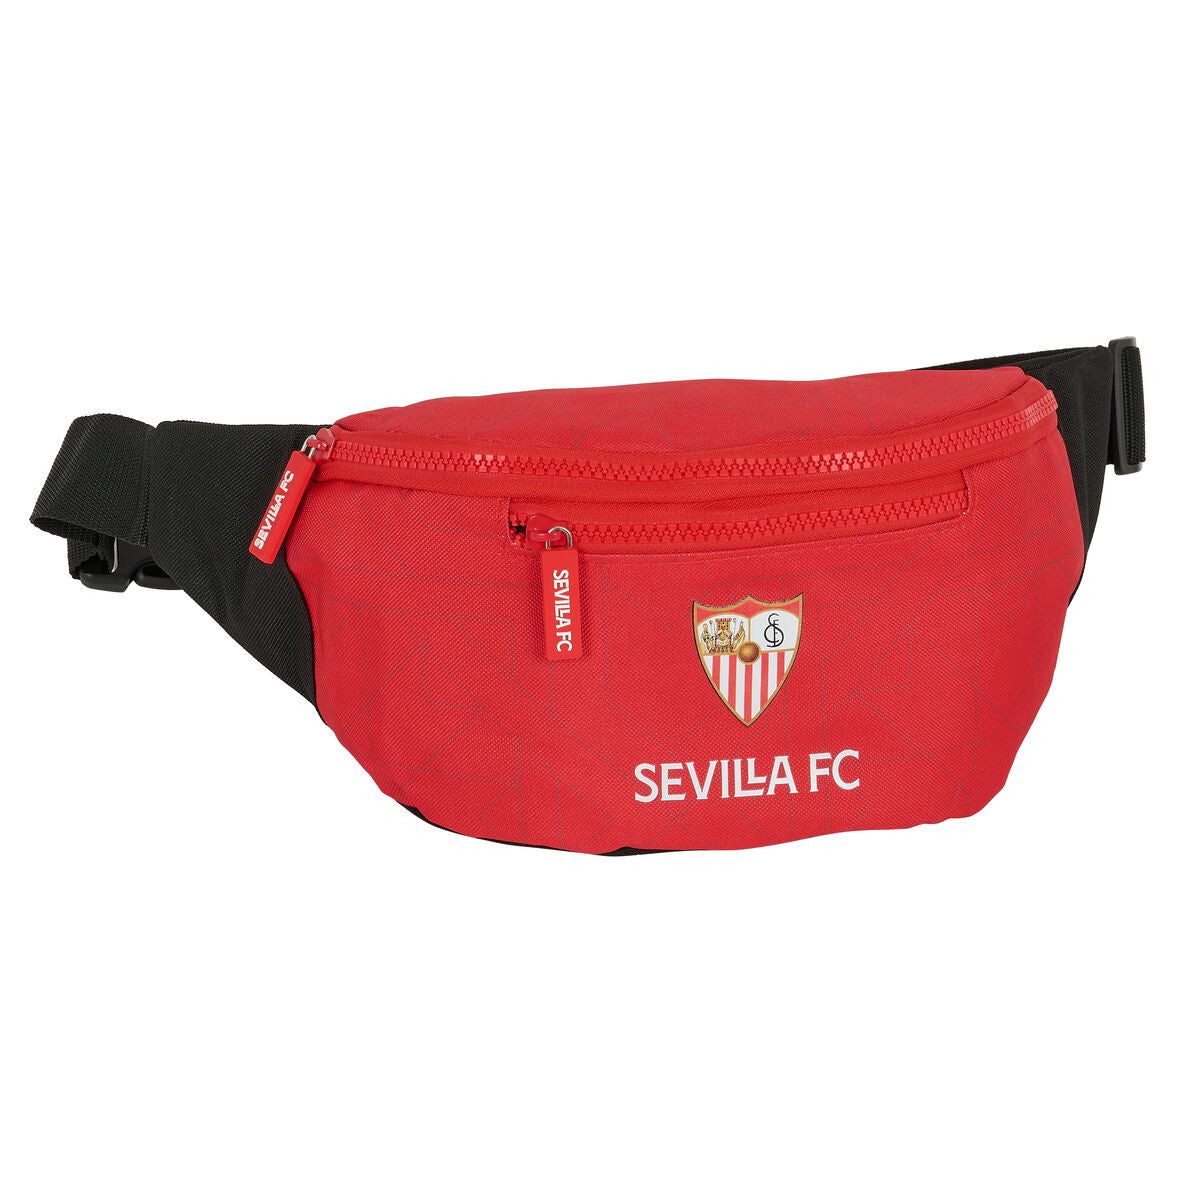 Laukku Sevilla Fútbol Club Musta Punainen Urheilu 23 x 12 x 9 cm